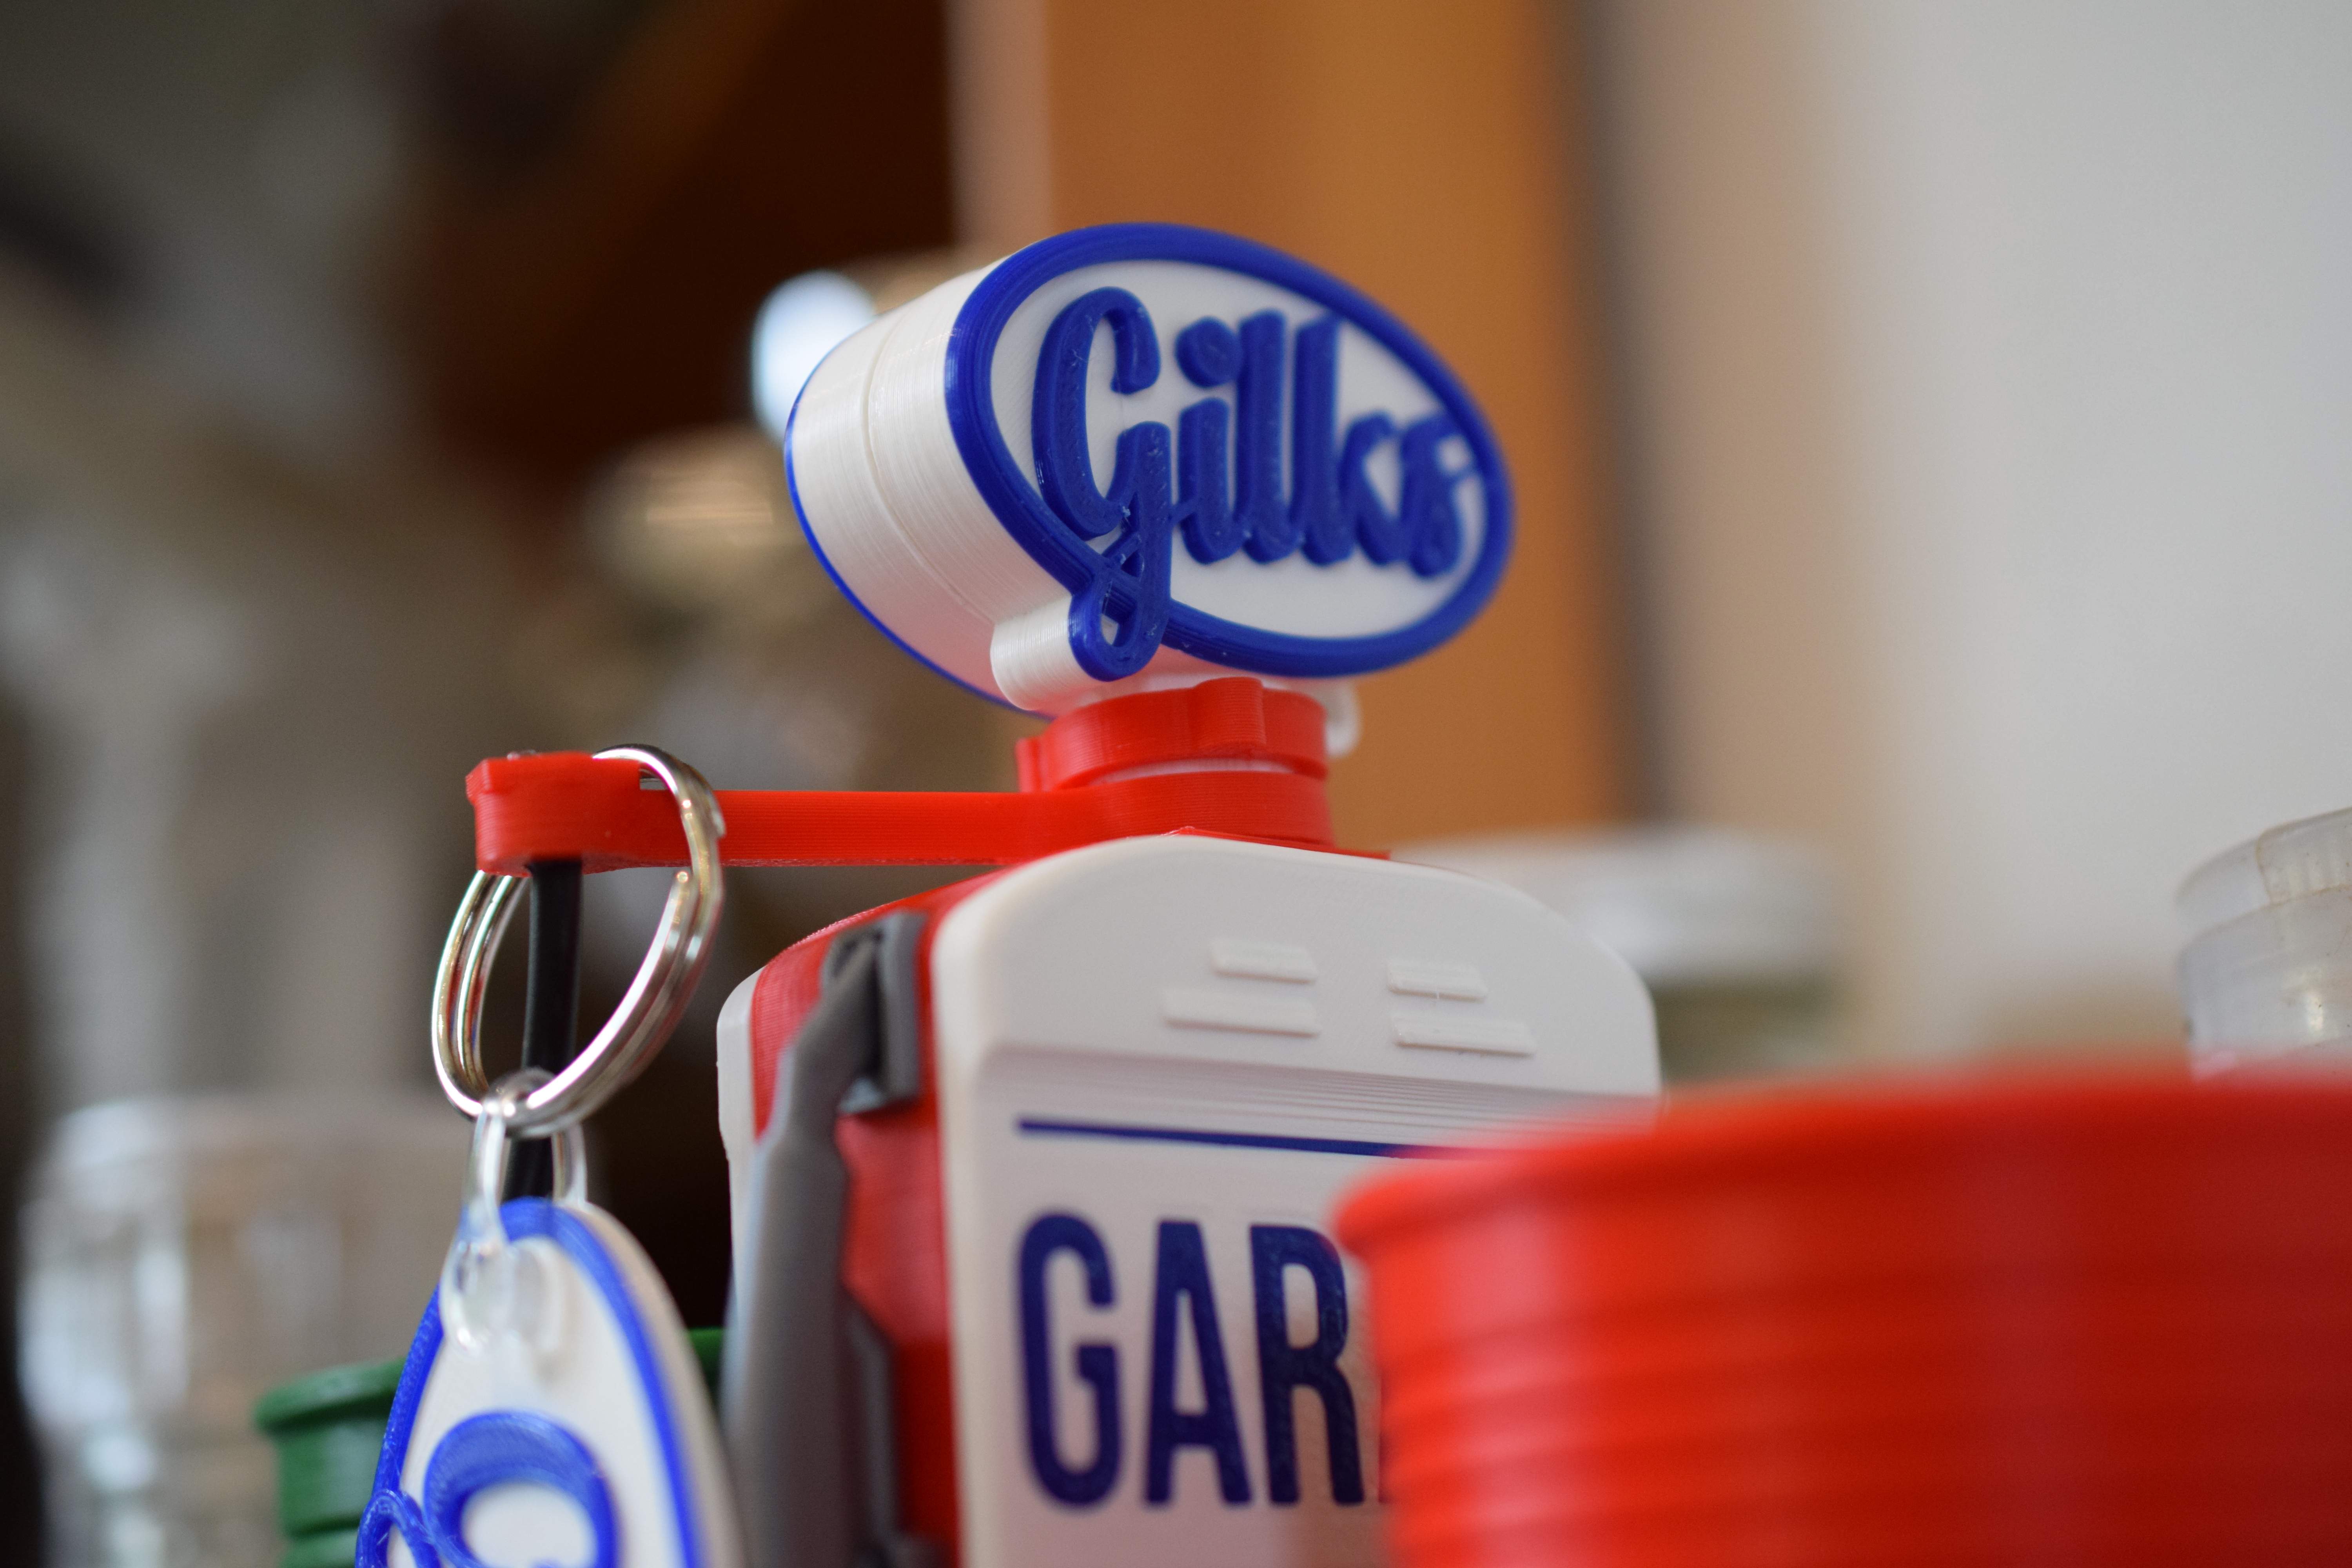 Gilks' Salt and Pepper Shakers